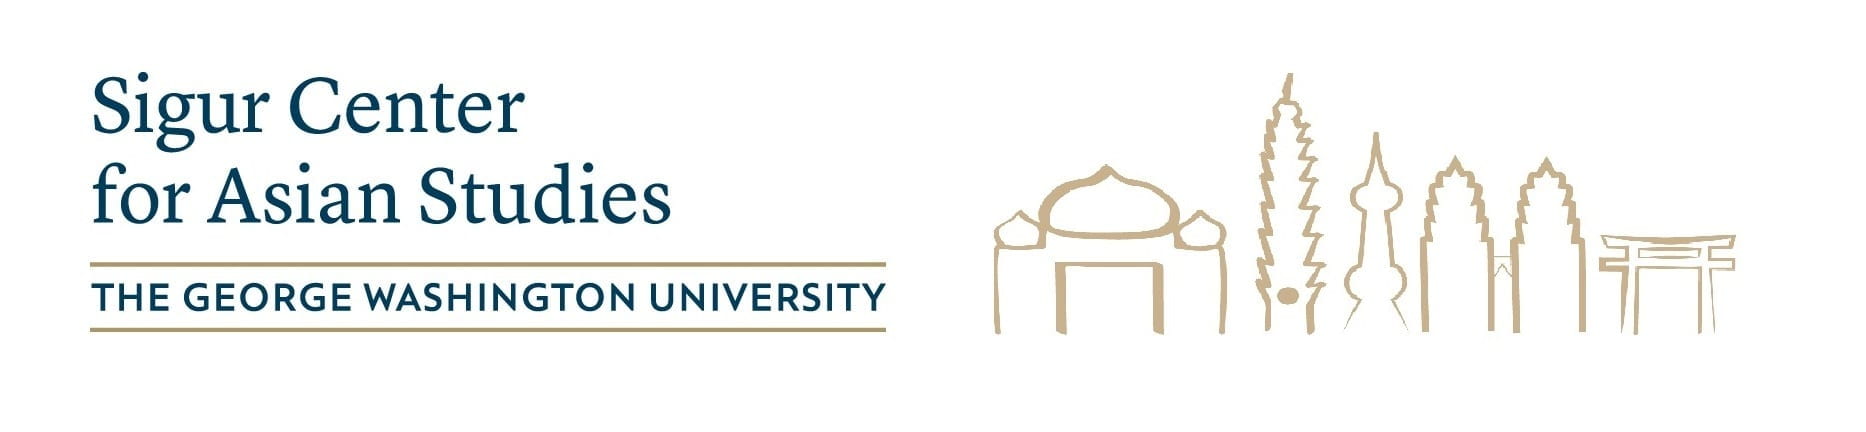 Sigur Center logo with line art of Asian landmarks